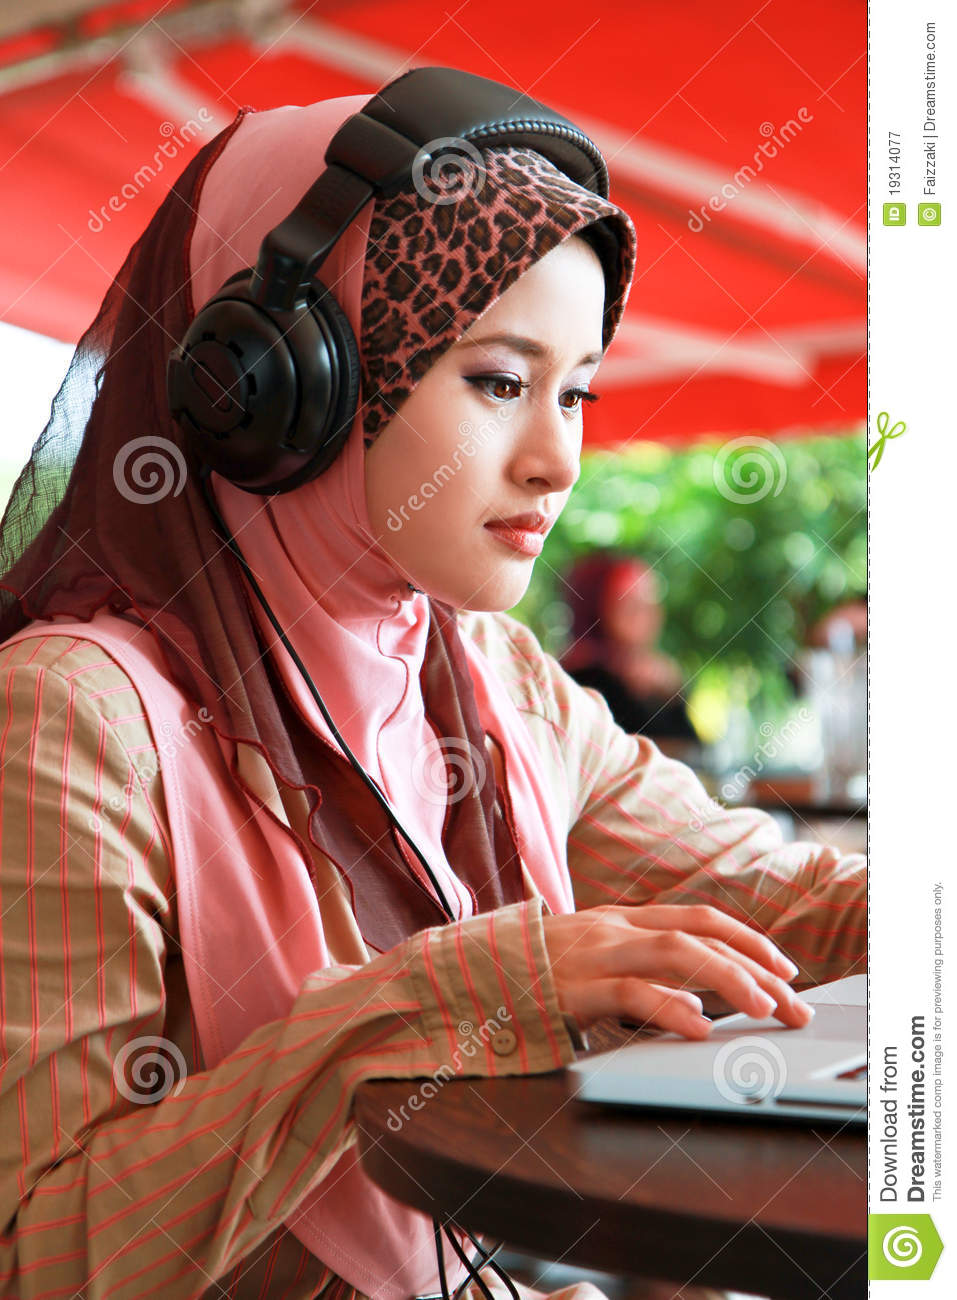 10 Beautiful Muslim Women Stock Photos Images